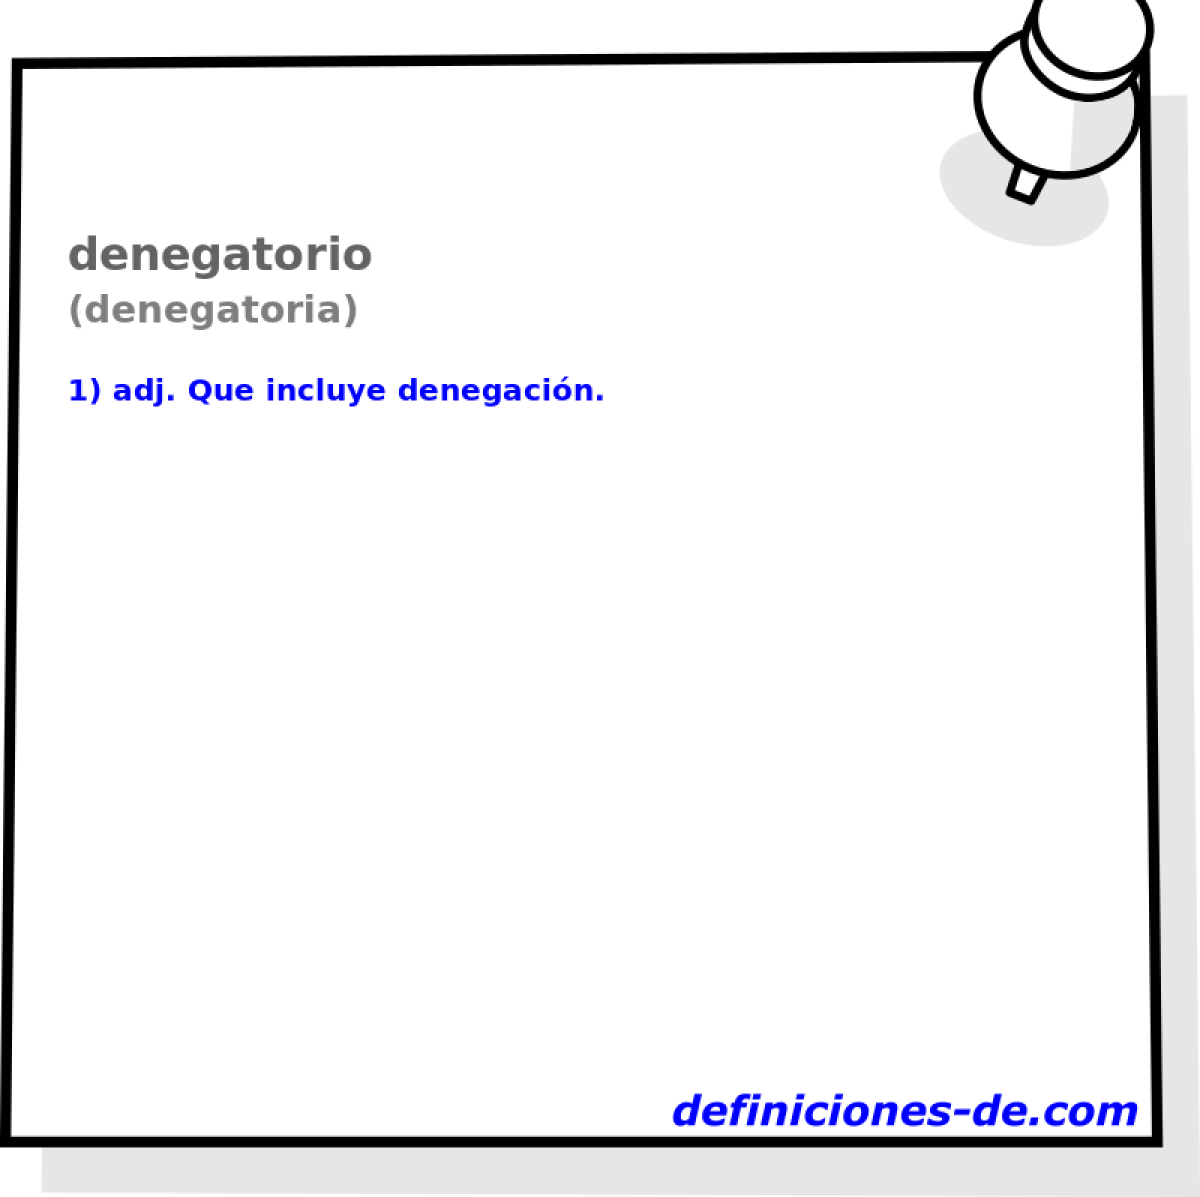 denegatorio (denegatoria)